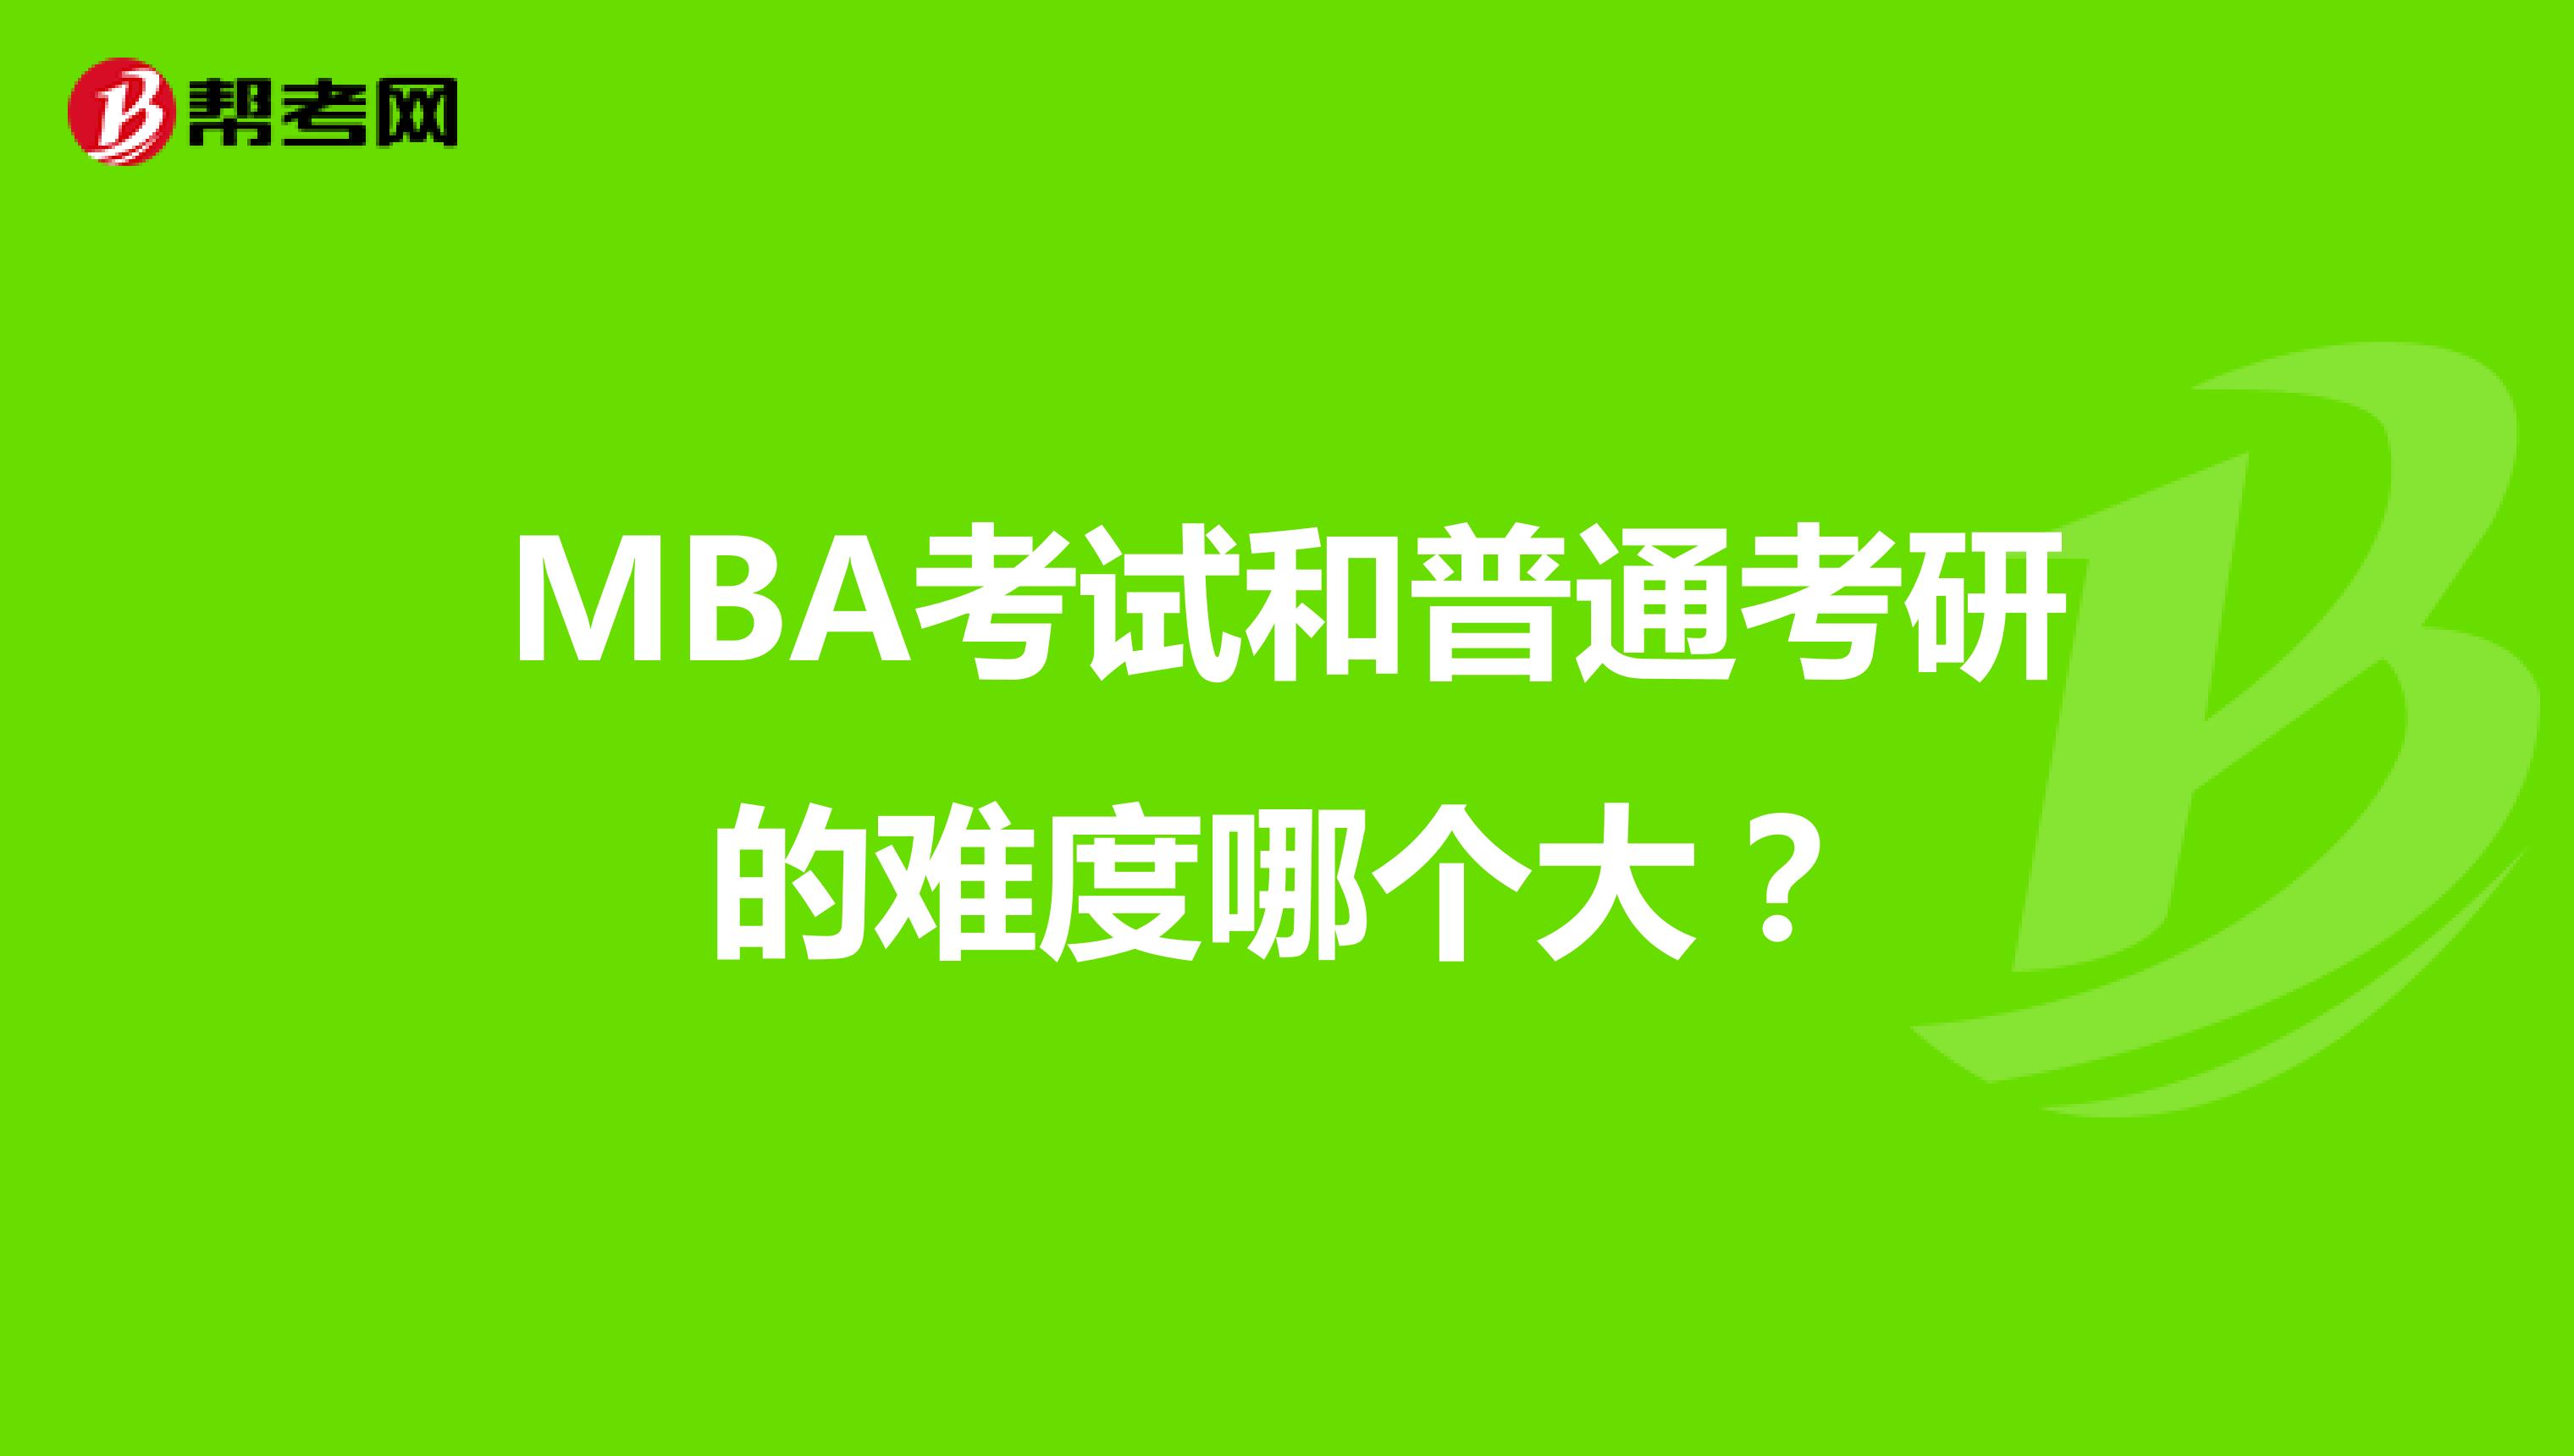 MBA考试和普通考研的难度哪个大？